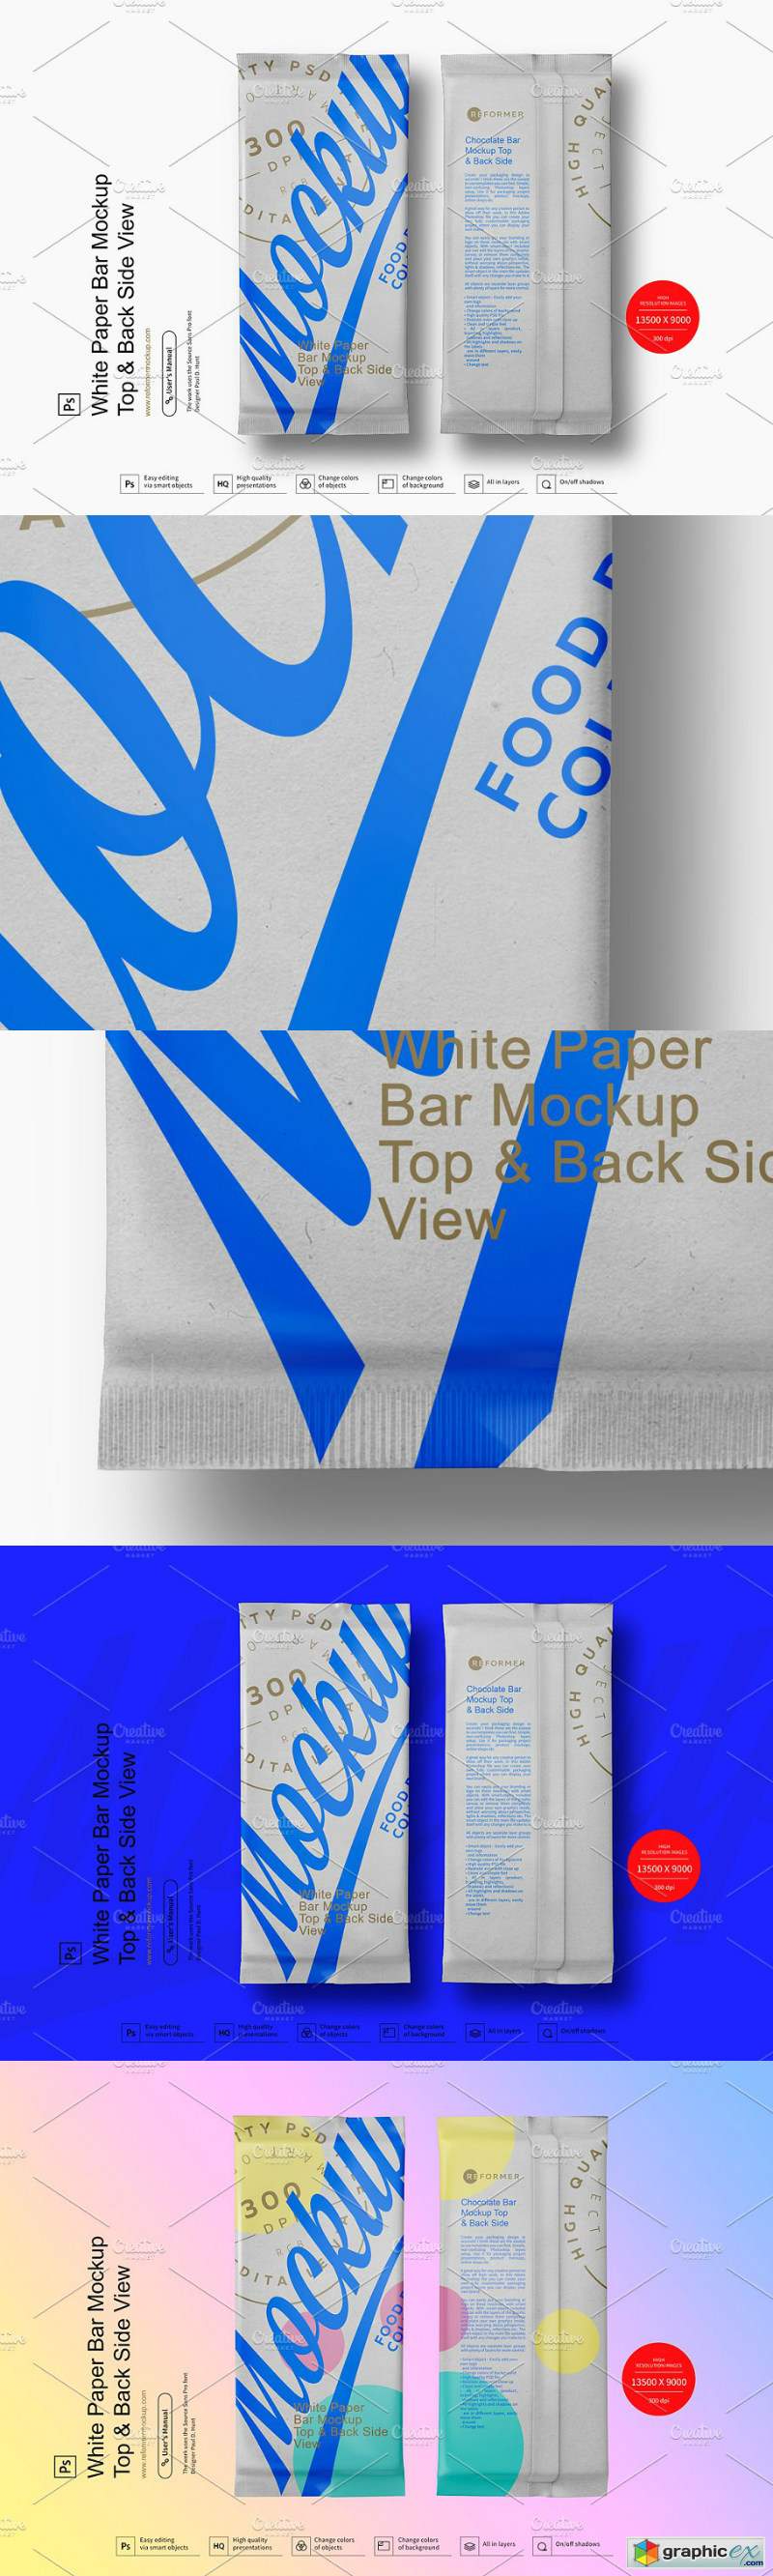 White Paper Bar Mockup